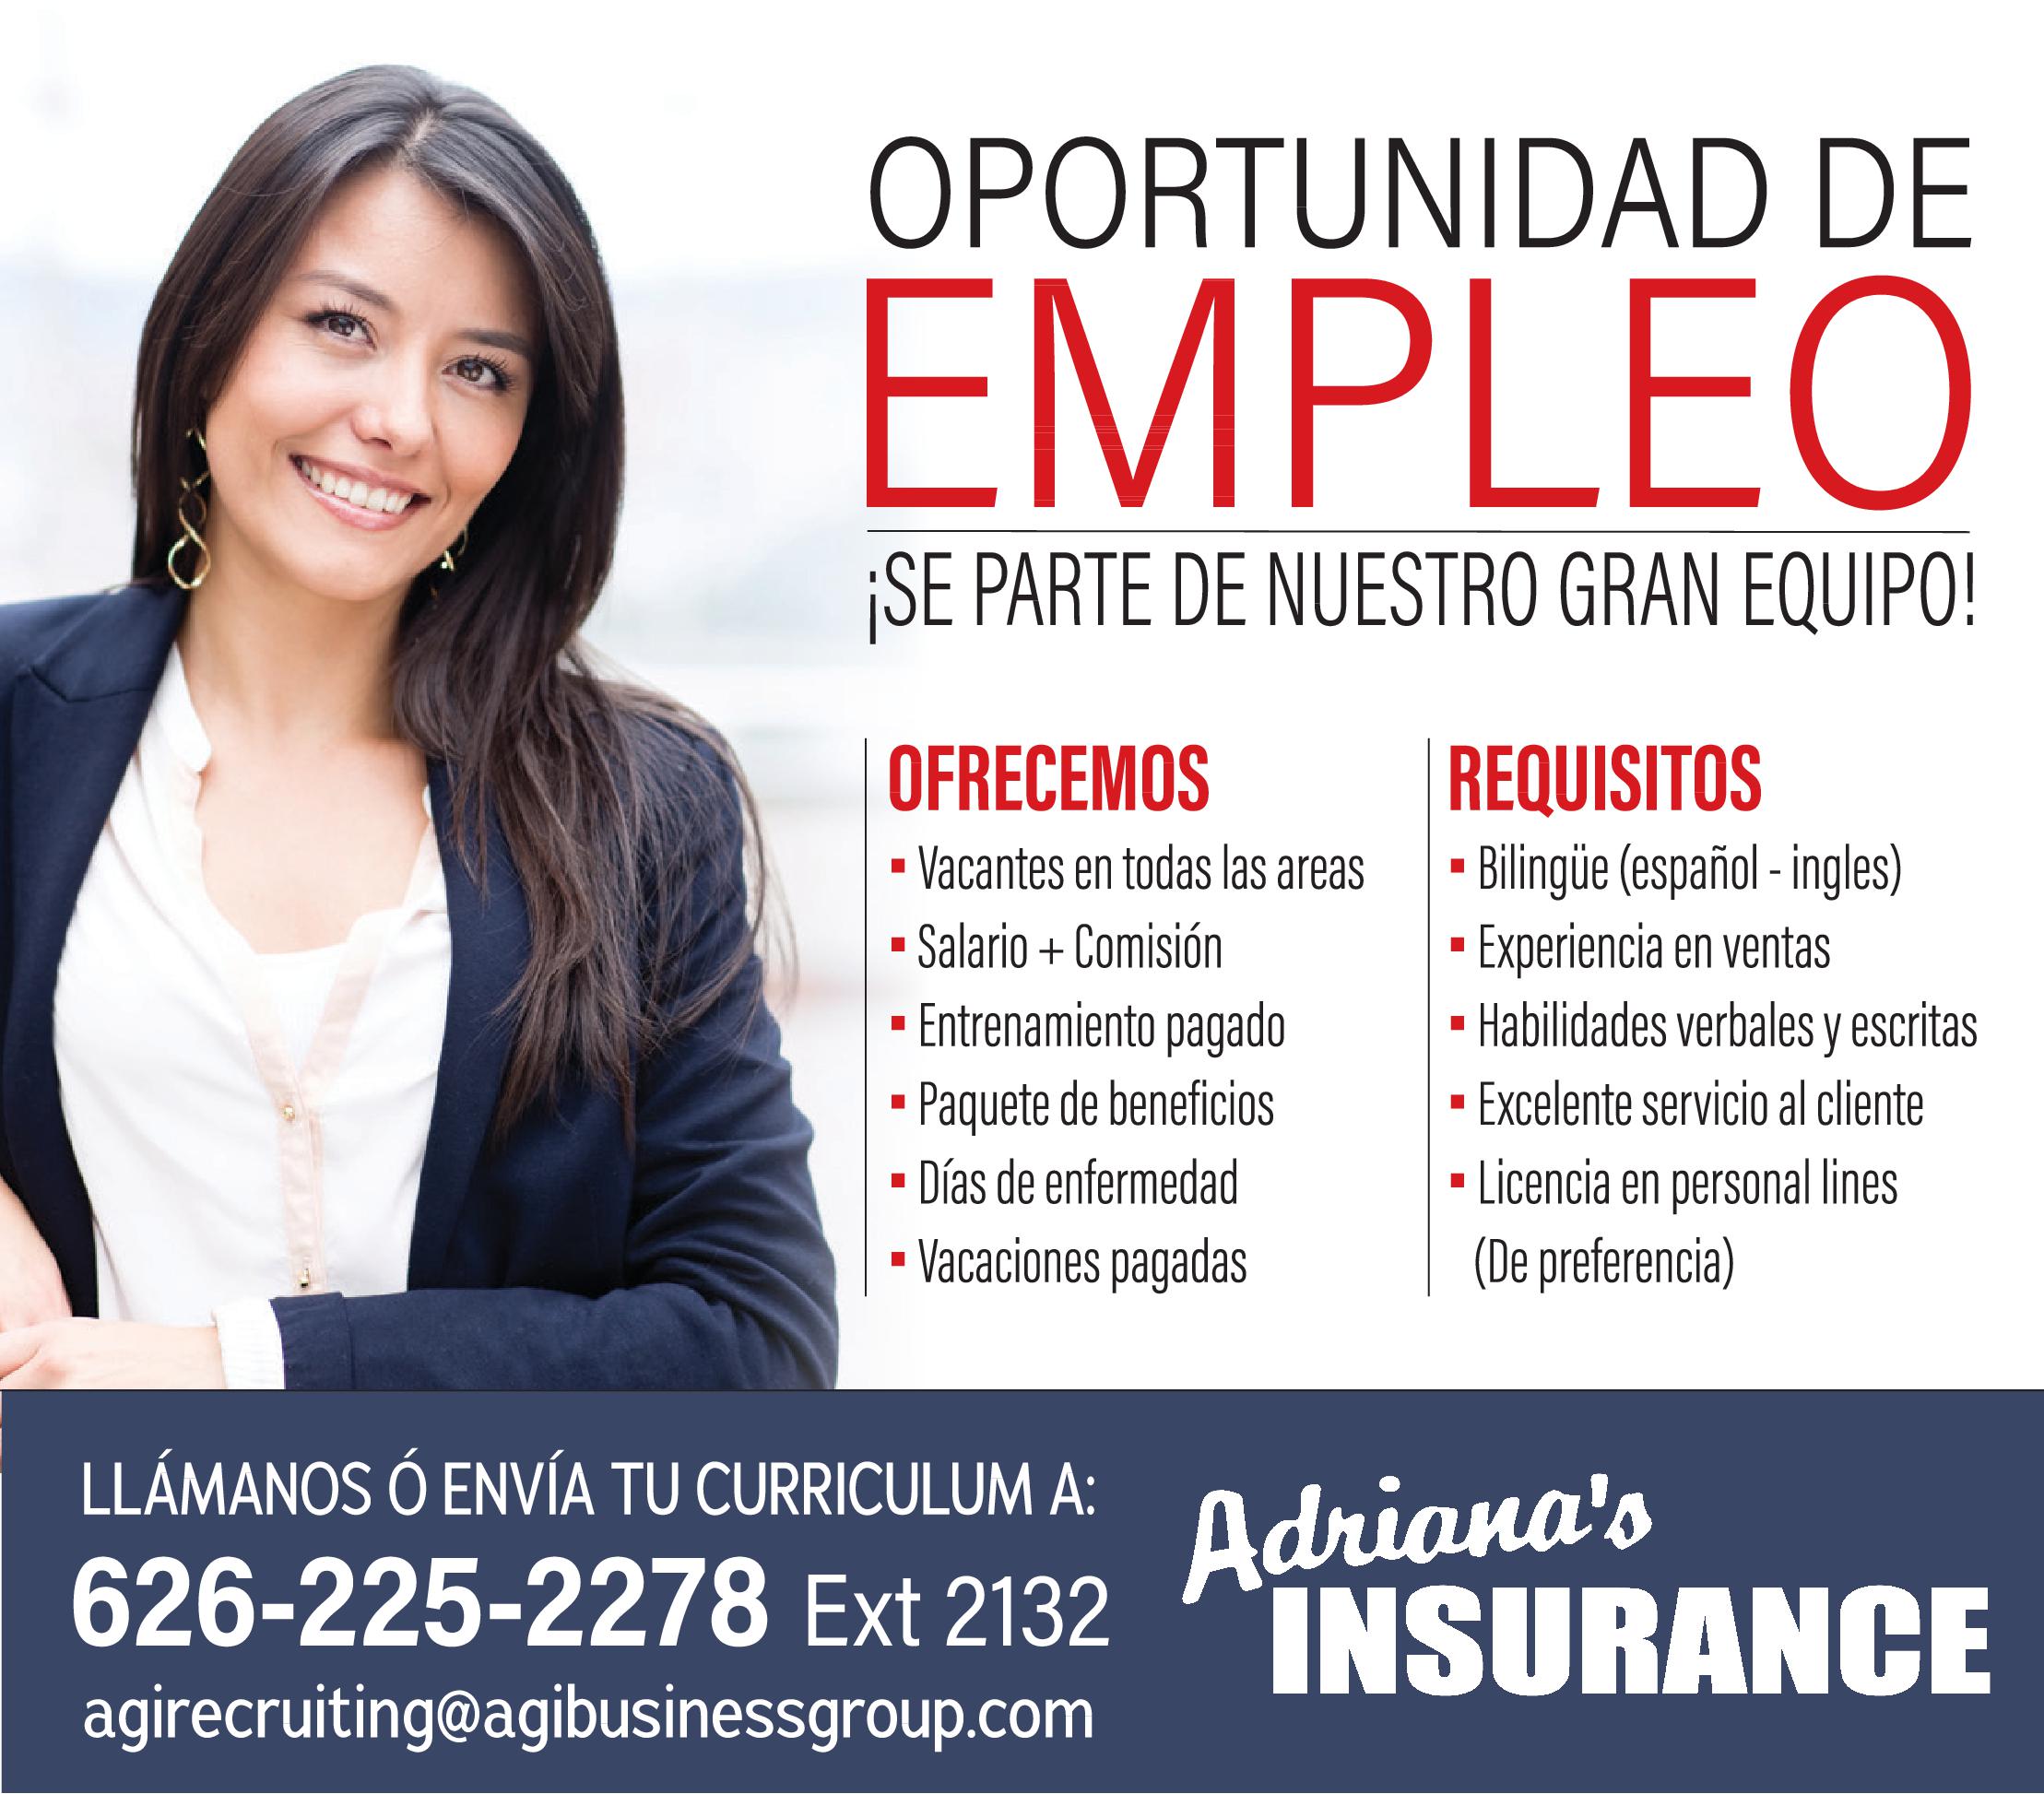 Adriana's Insurance